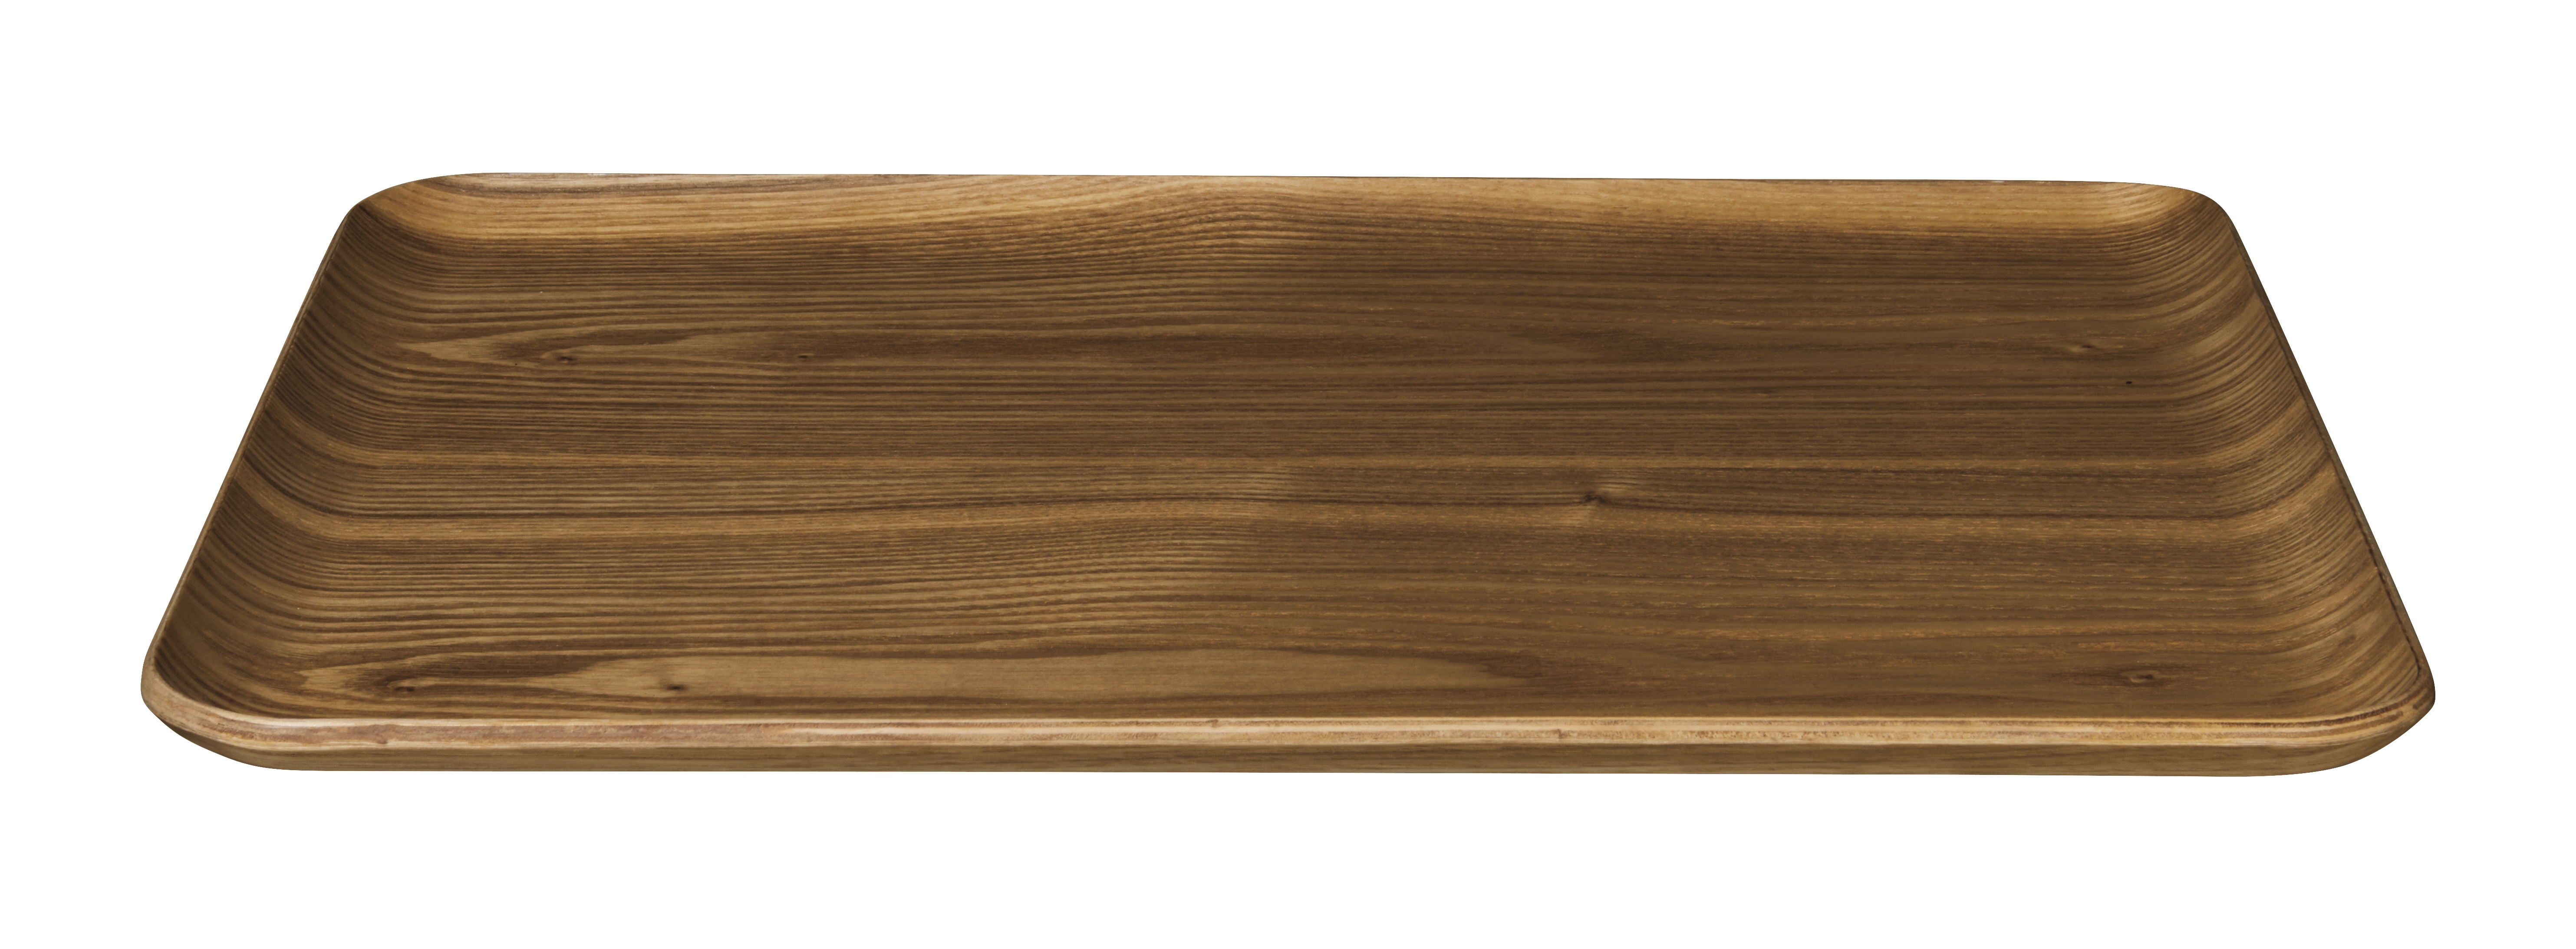 ASA - Holztablett, Wood rechteckig, 36x28cm